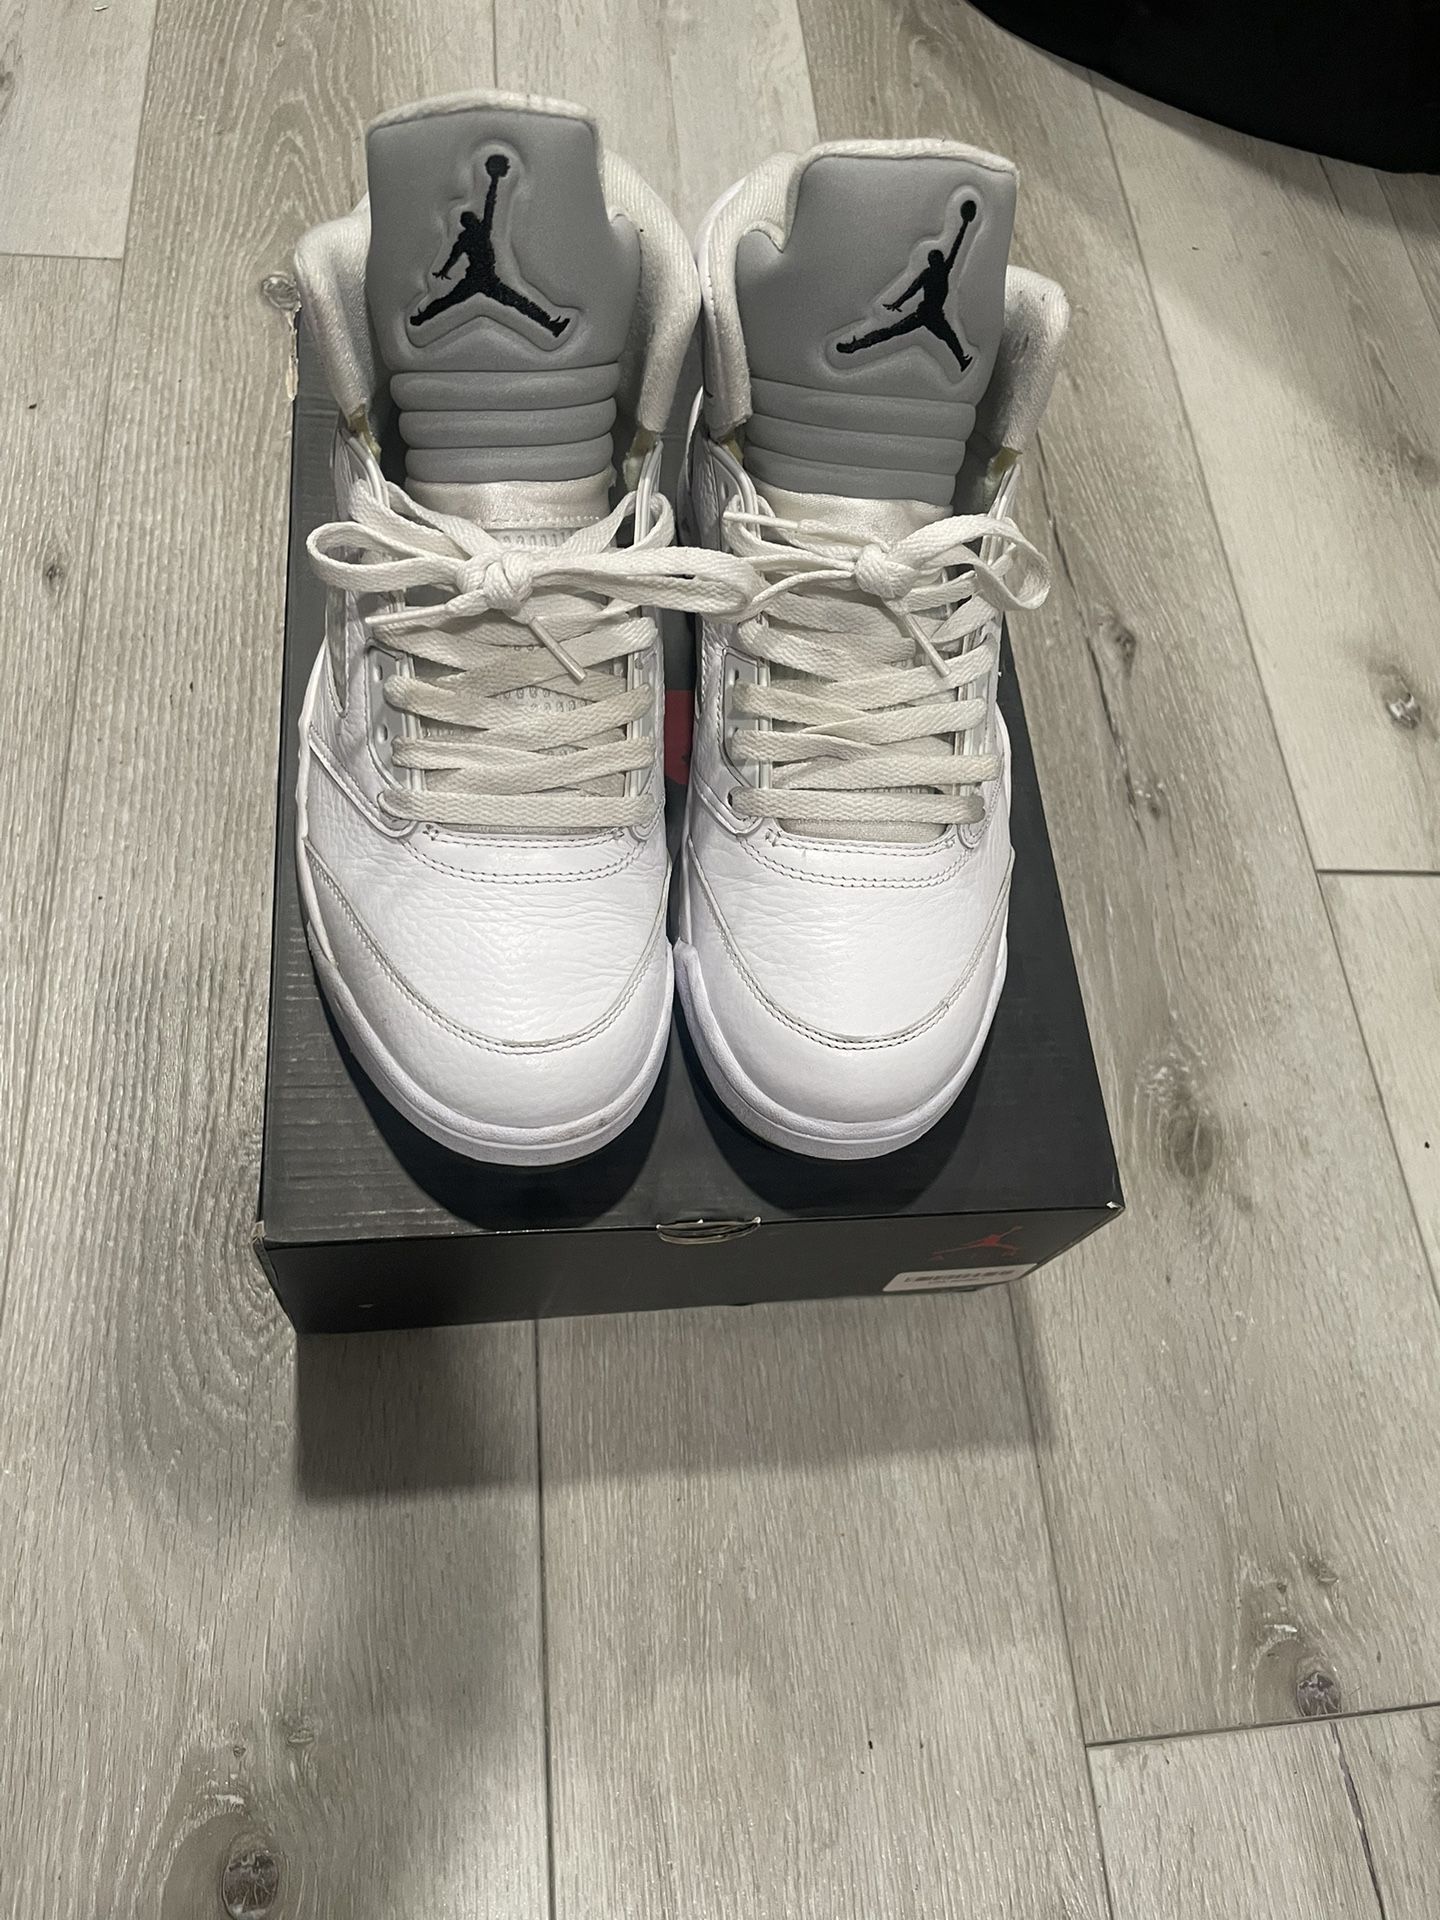 Jordan 5 White Metallic Size 9.5